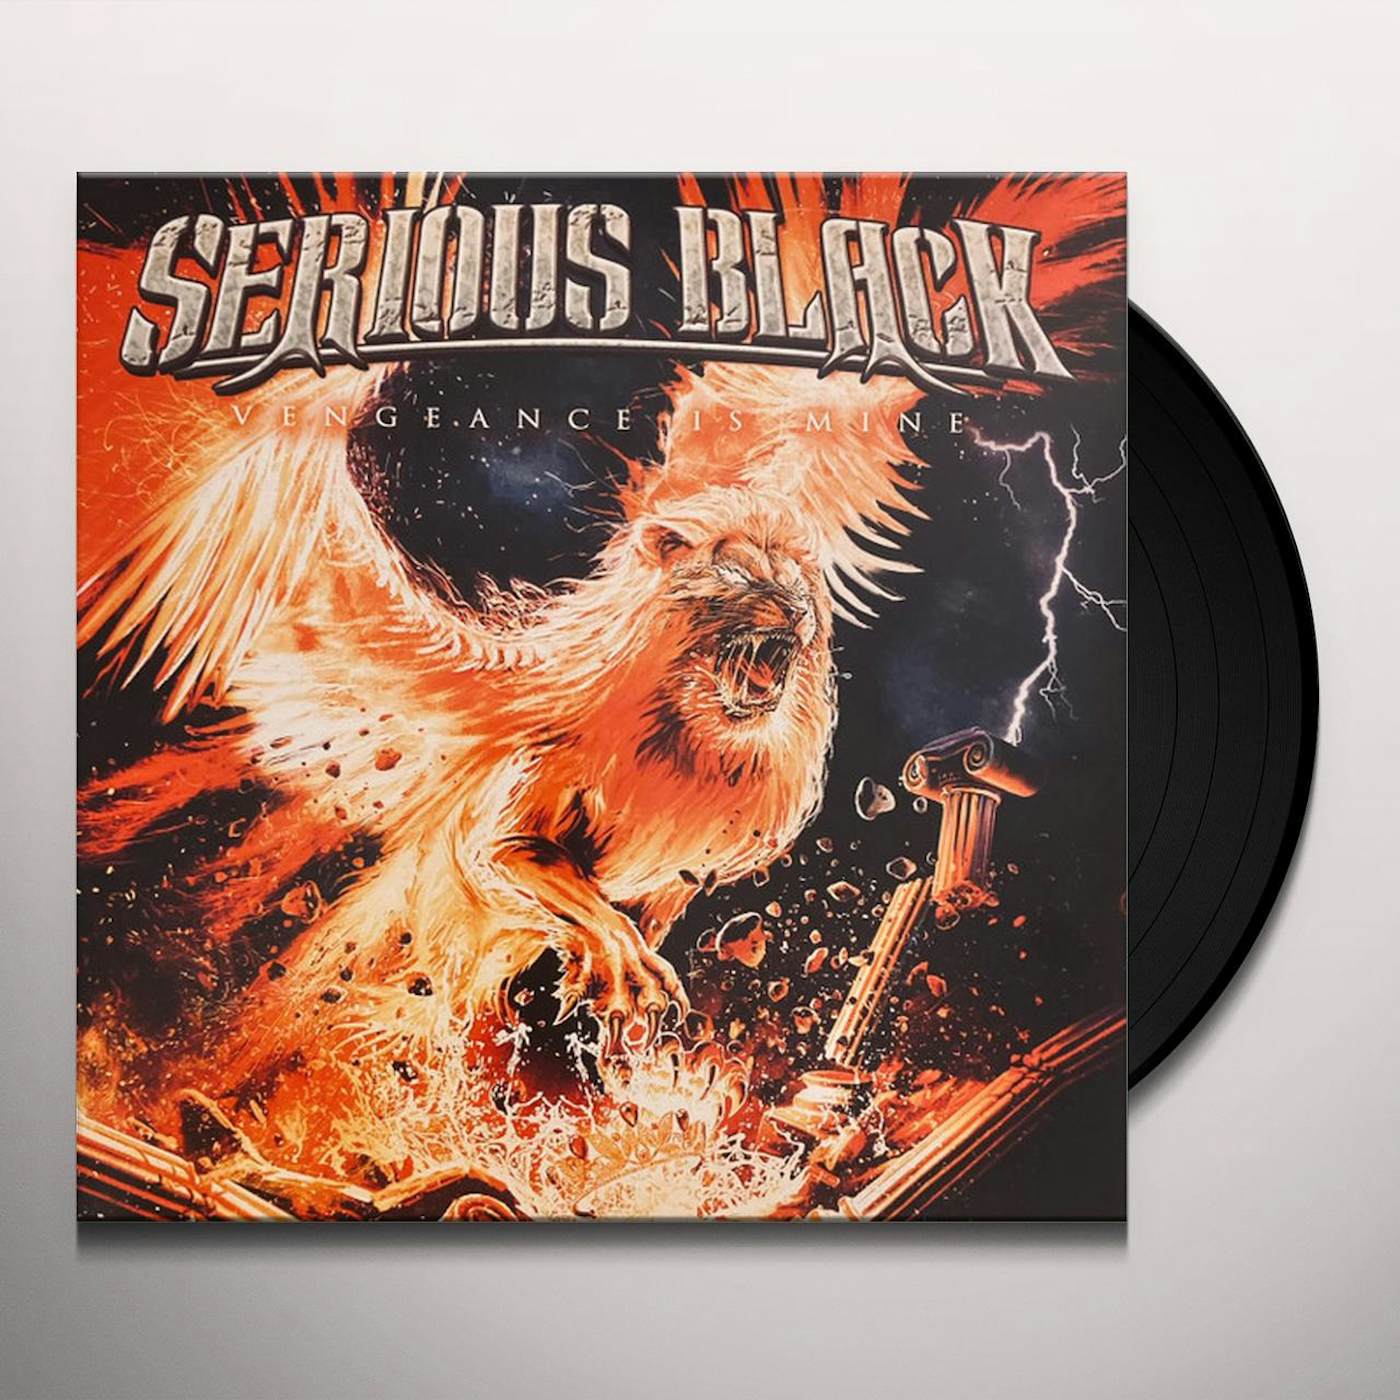 Serious Black Vengeance Is Mine Vinyl Record